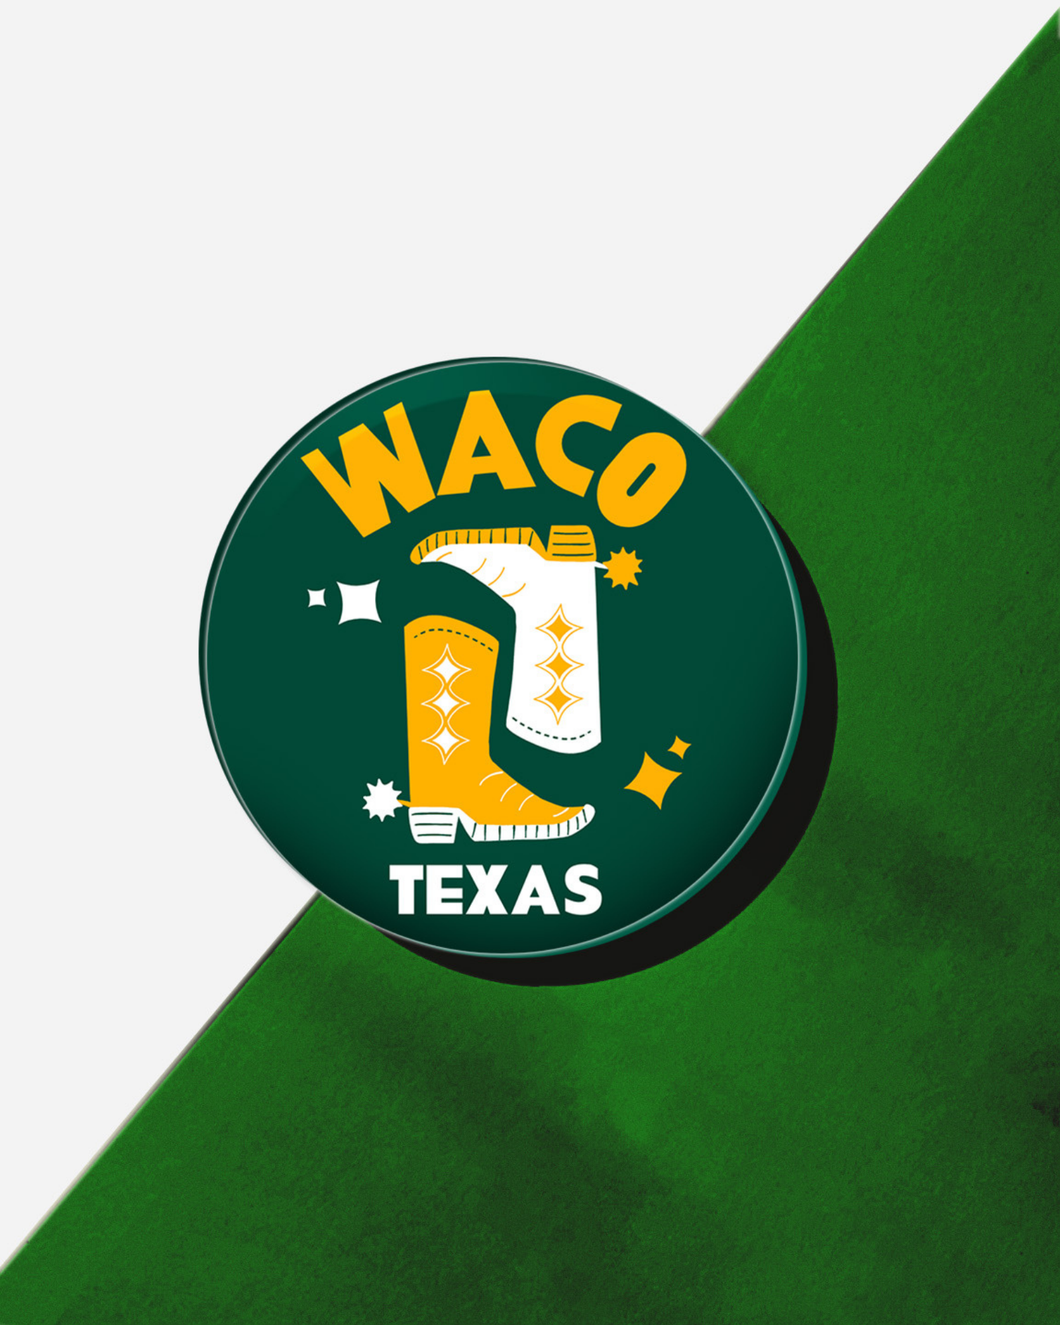 Waco, Texas Acrylic Drink Coasters